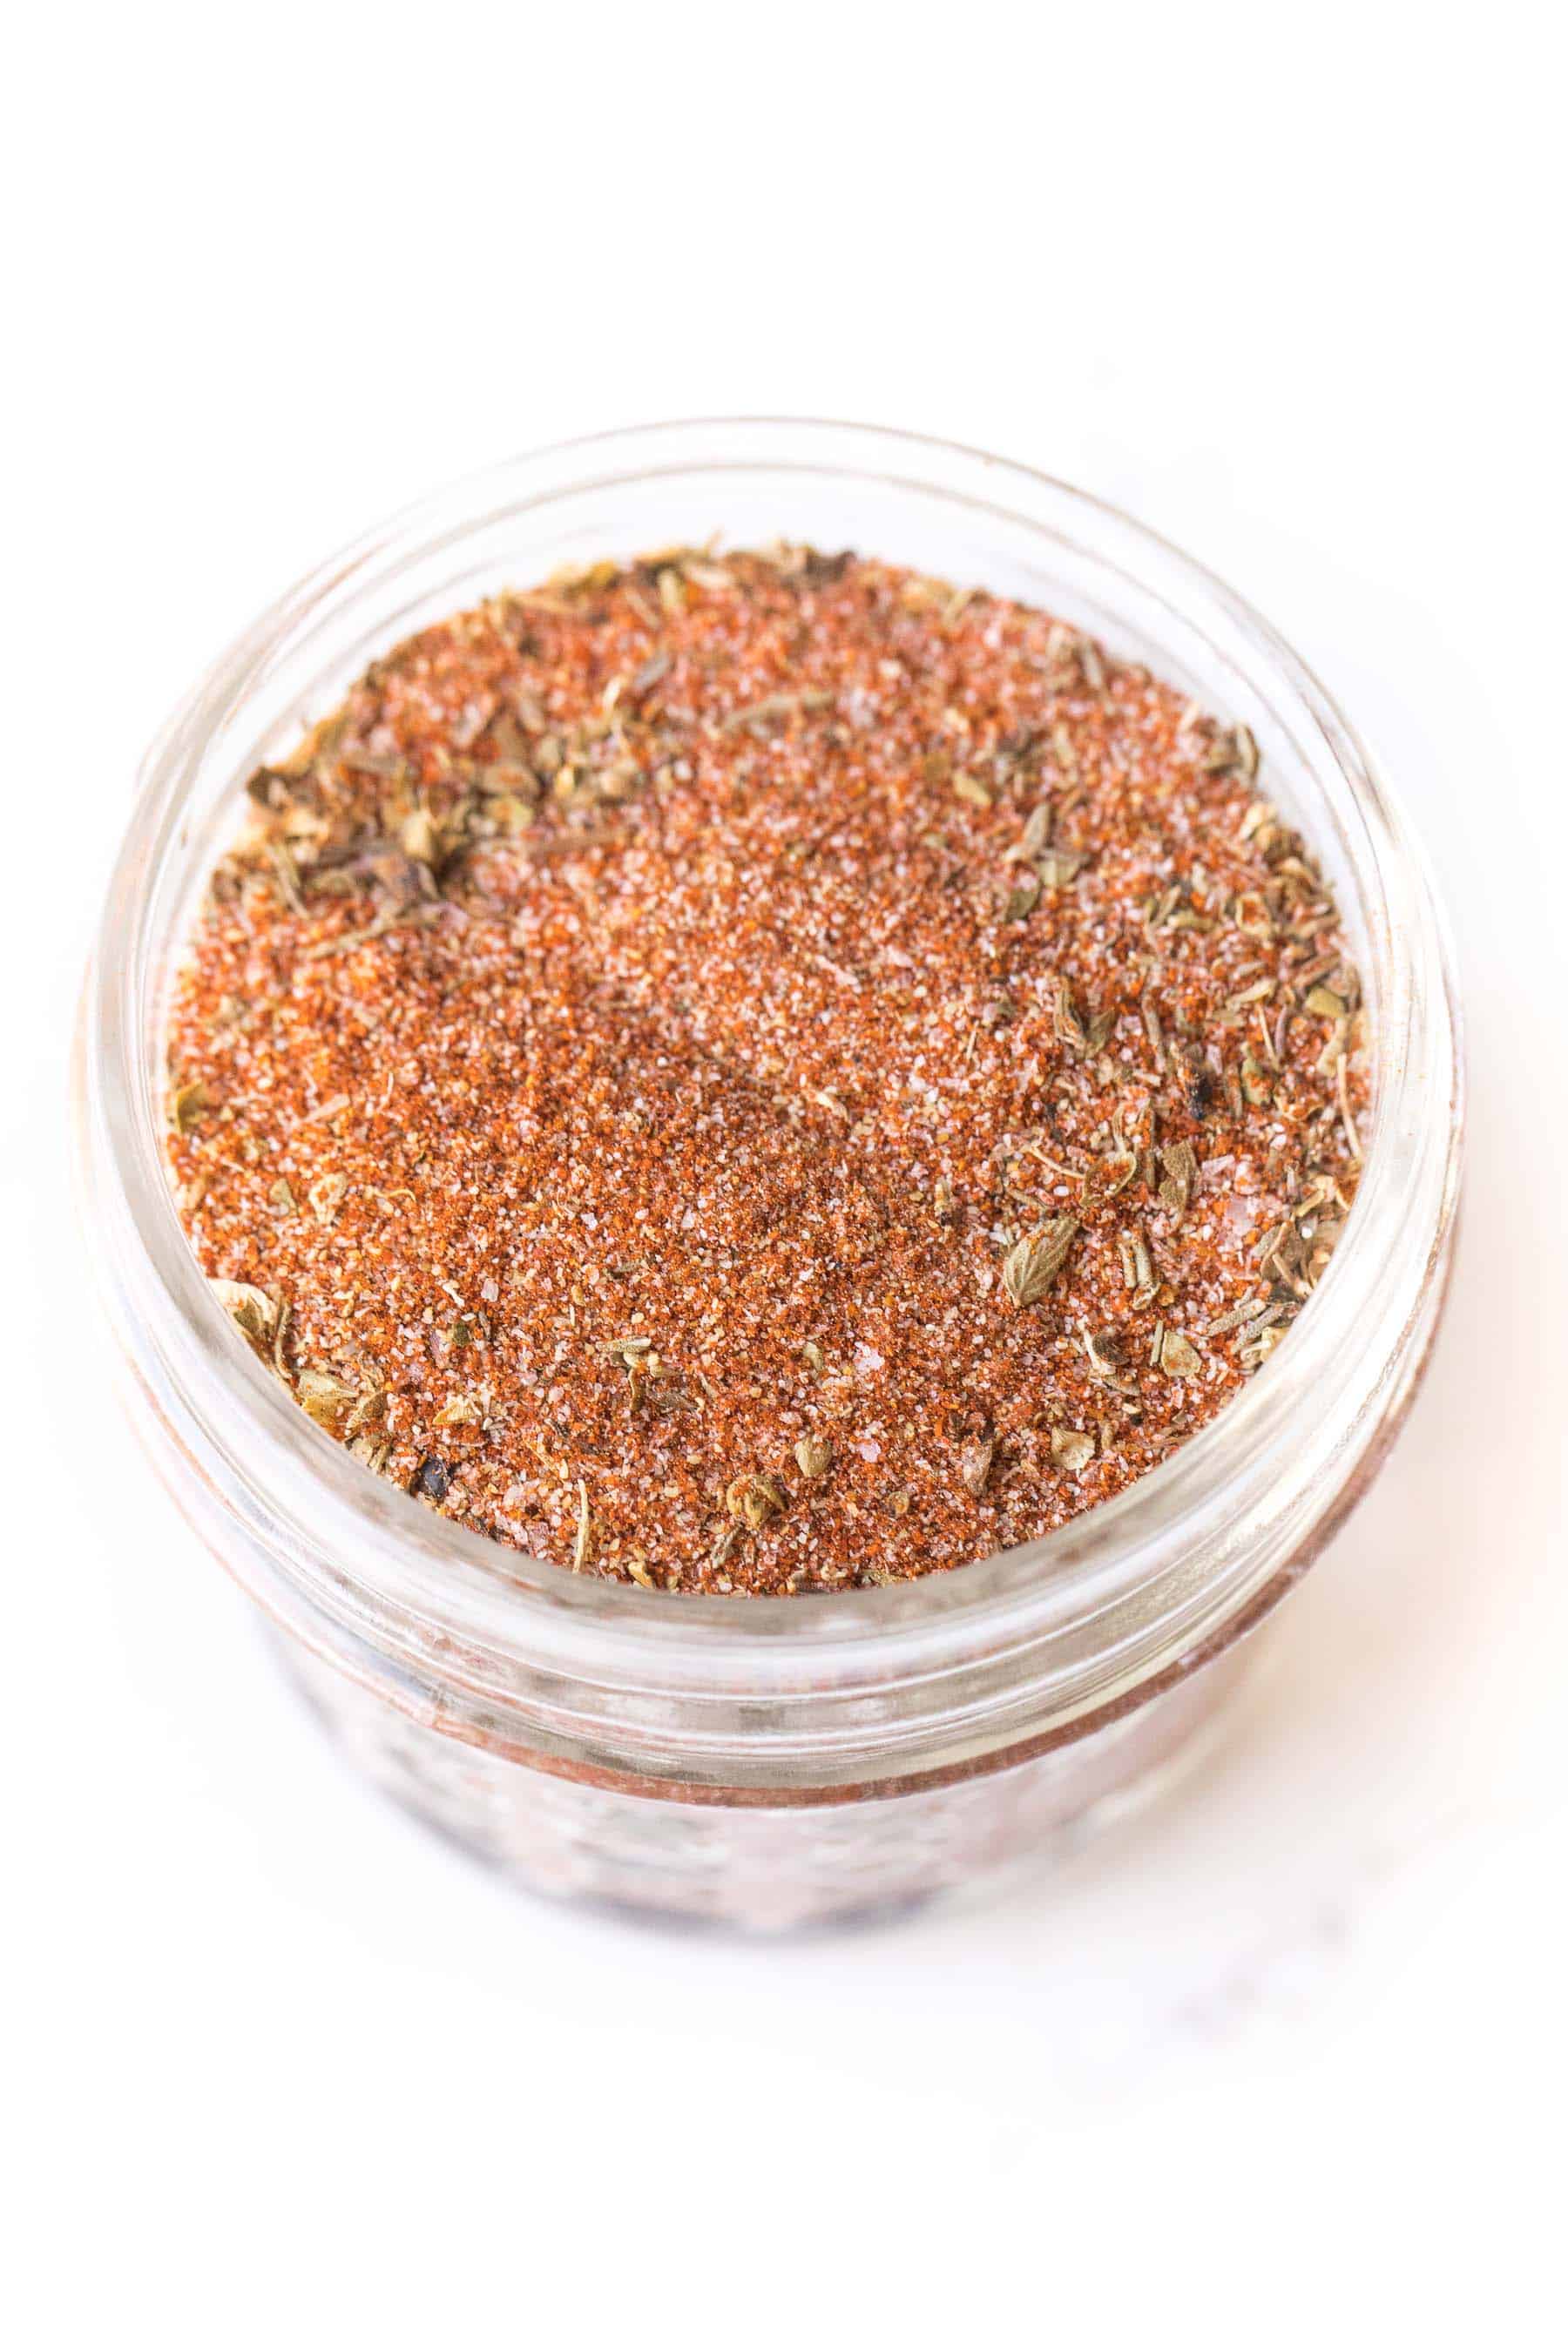 cajun seasoning in a small mason jar on a white background